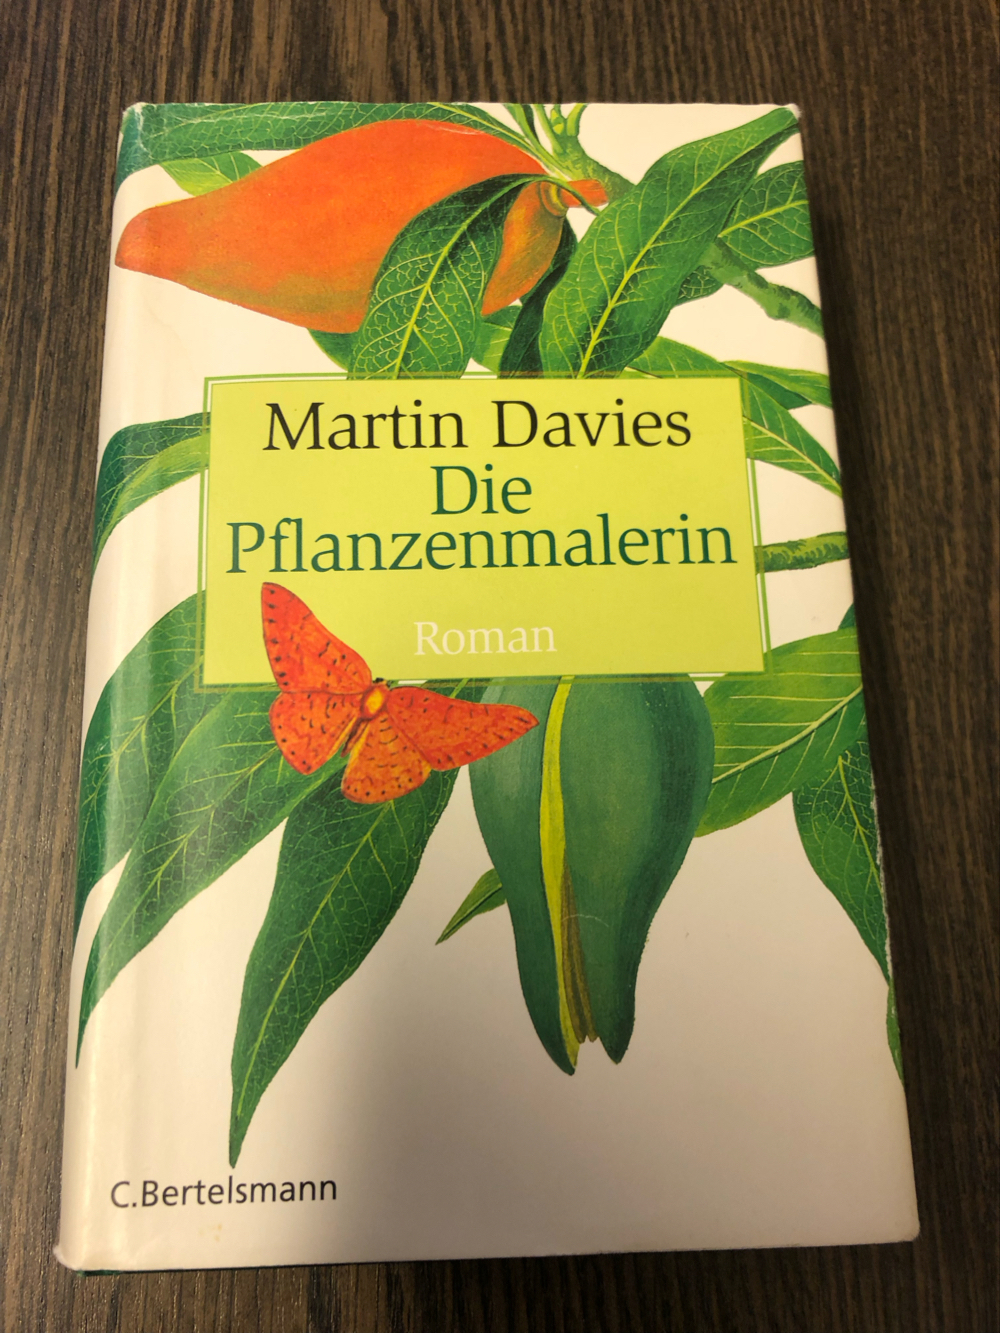 Die Pflanzenmalerin, Martin Davies